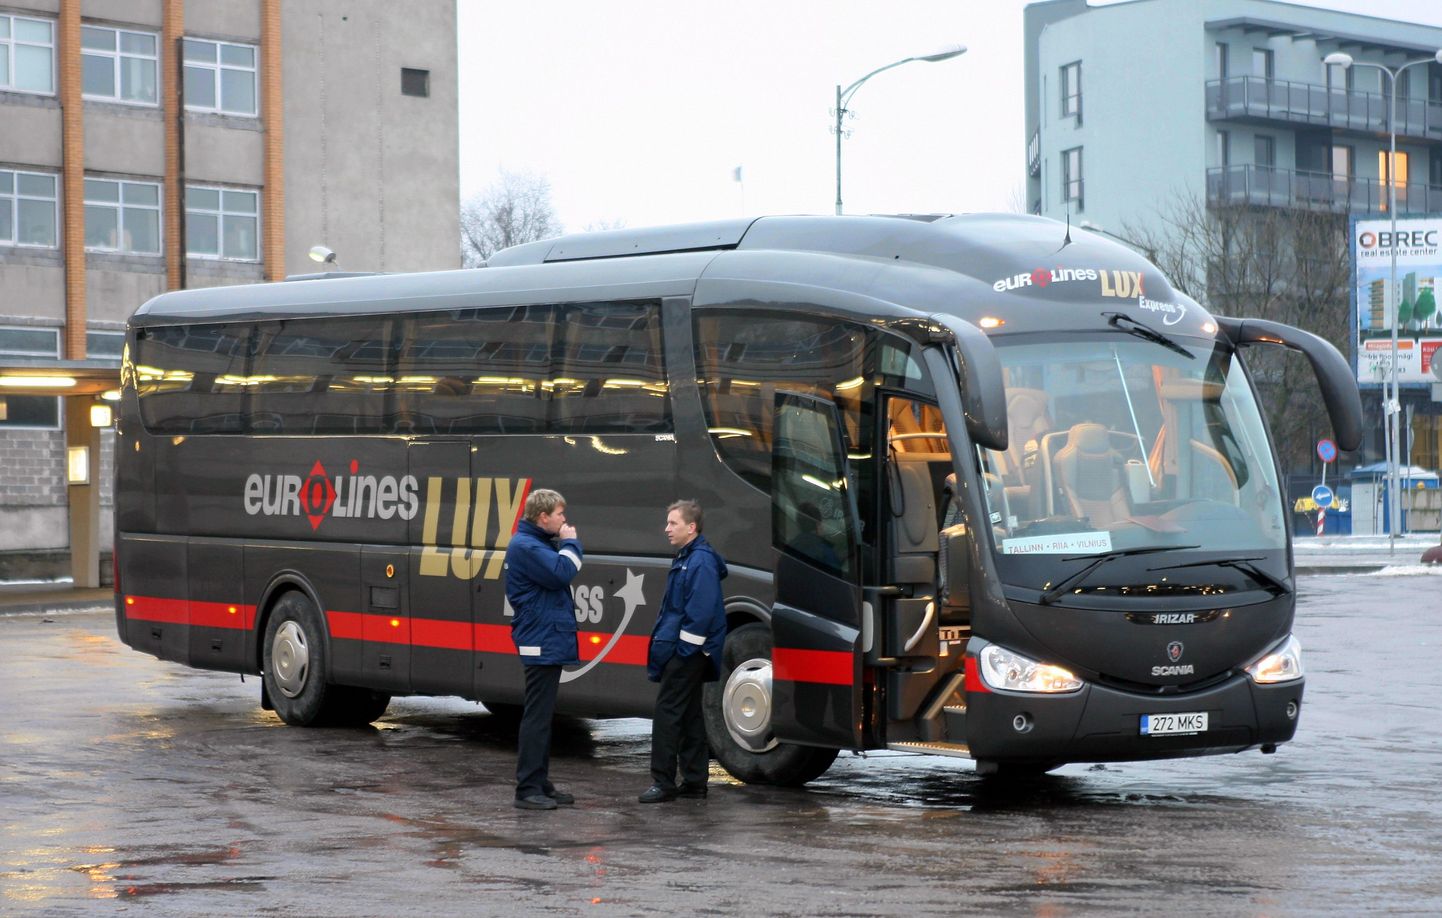 TLMP05:  EUROLINES BUSS   : TALLINN, EESTI, 11JAN08
Pildil on  Eurolines buss. 
lt/Foto:LIIS TREIMANN